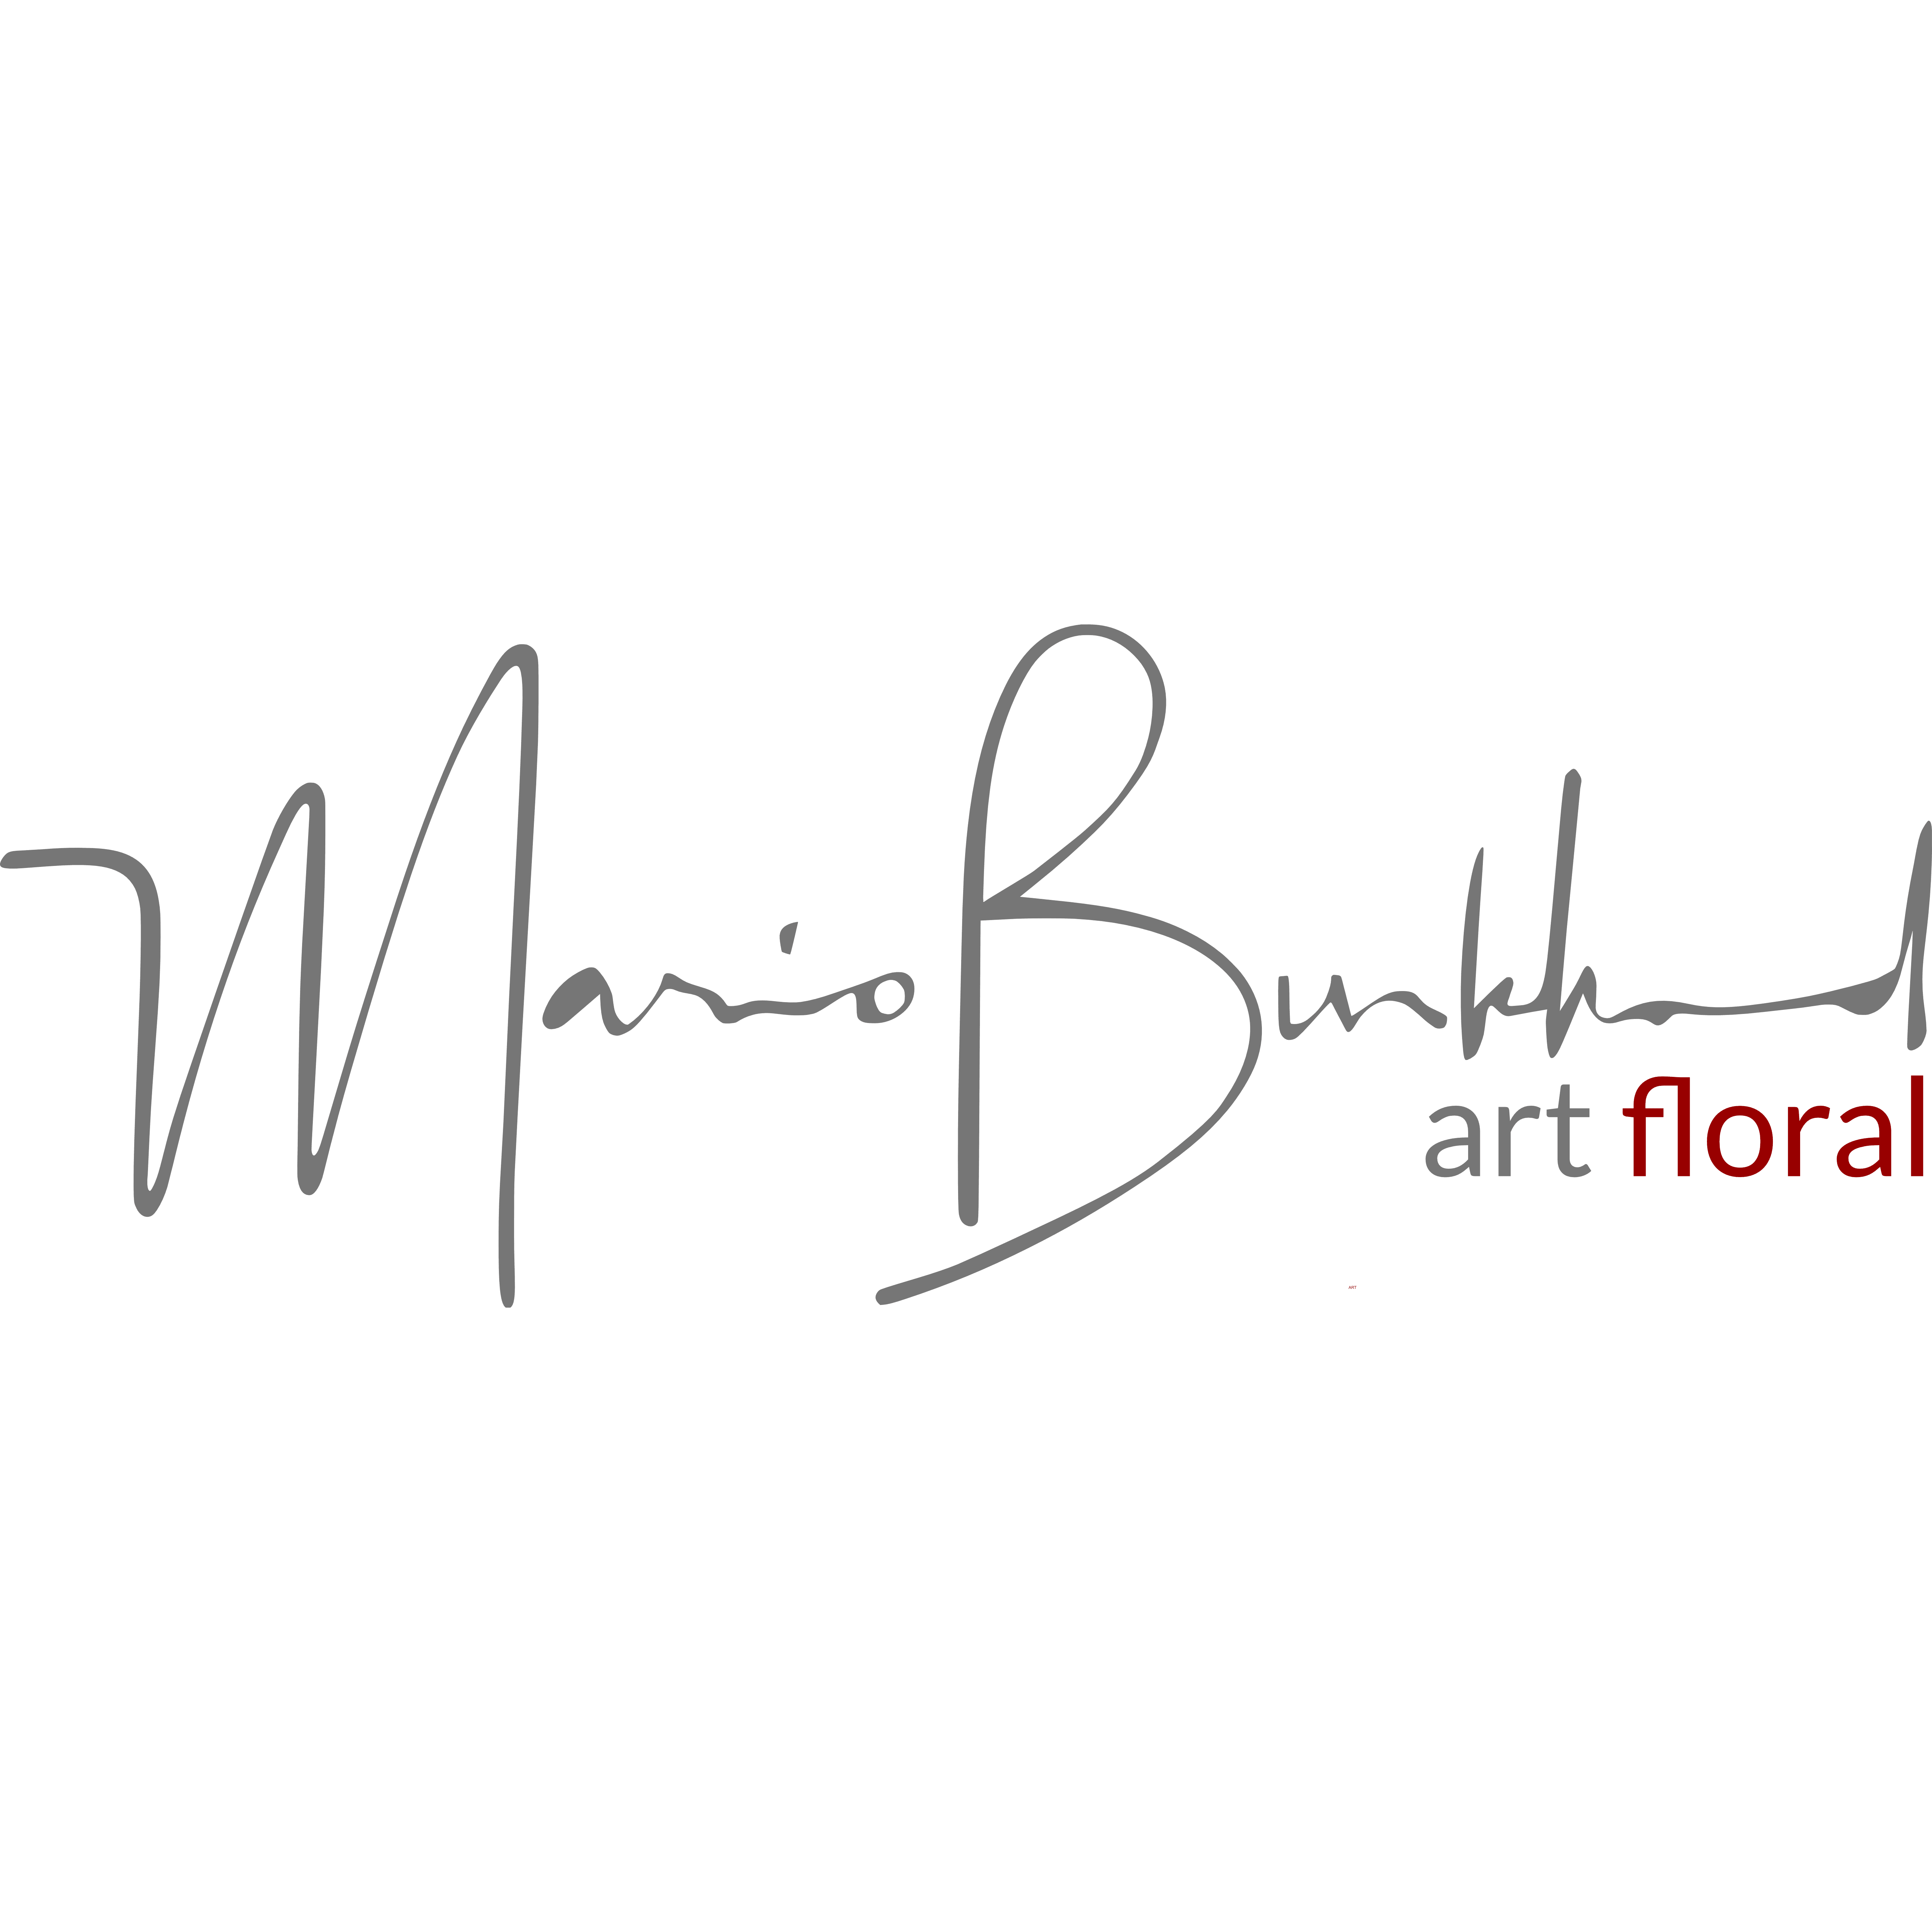 mario burkhard art floral gmbh - Florist - Bern - 031 311 11 01 Switzerland | ShowMeLocal.com